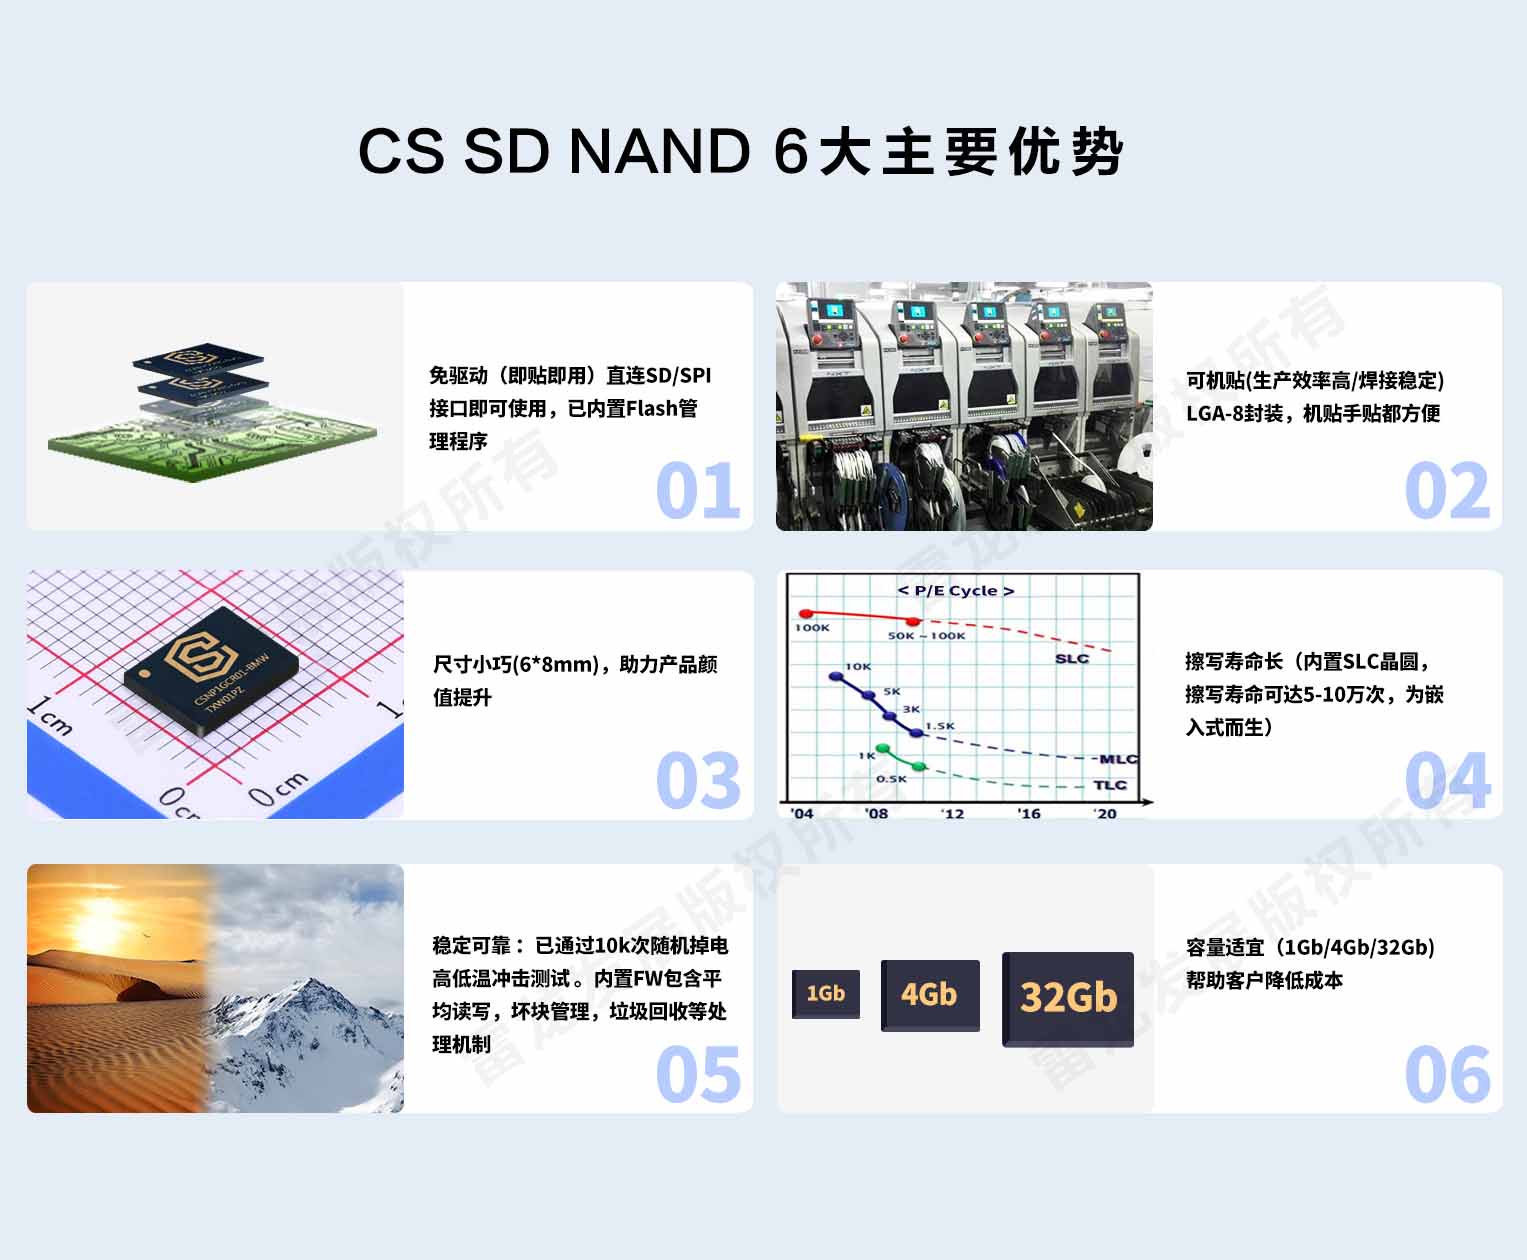 CS SD NAND6大主要优势